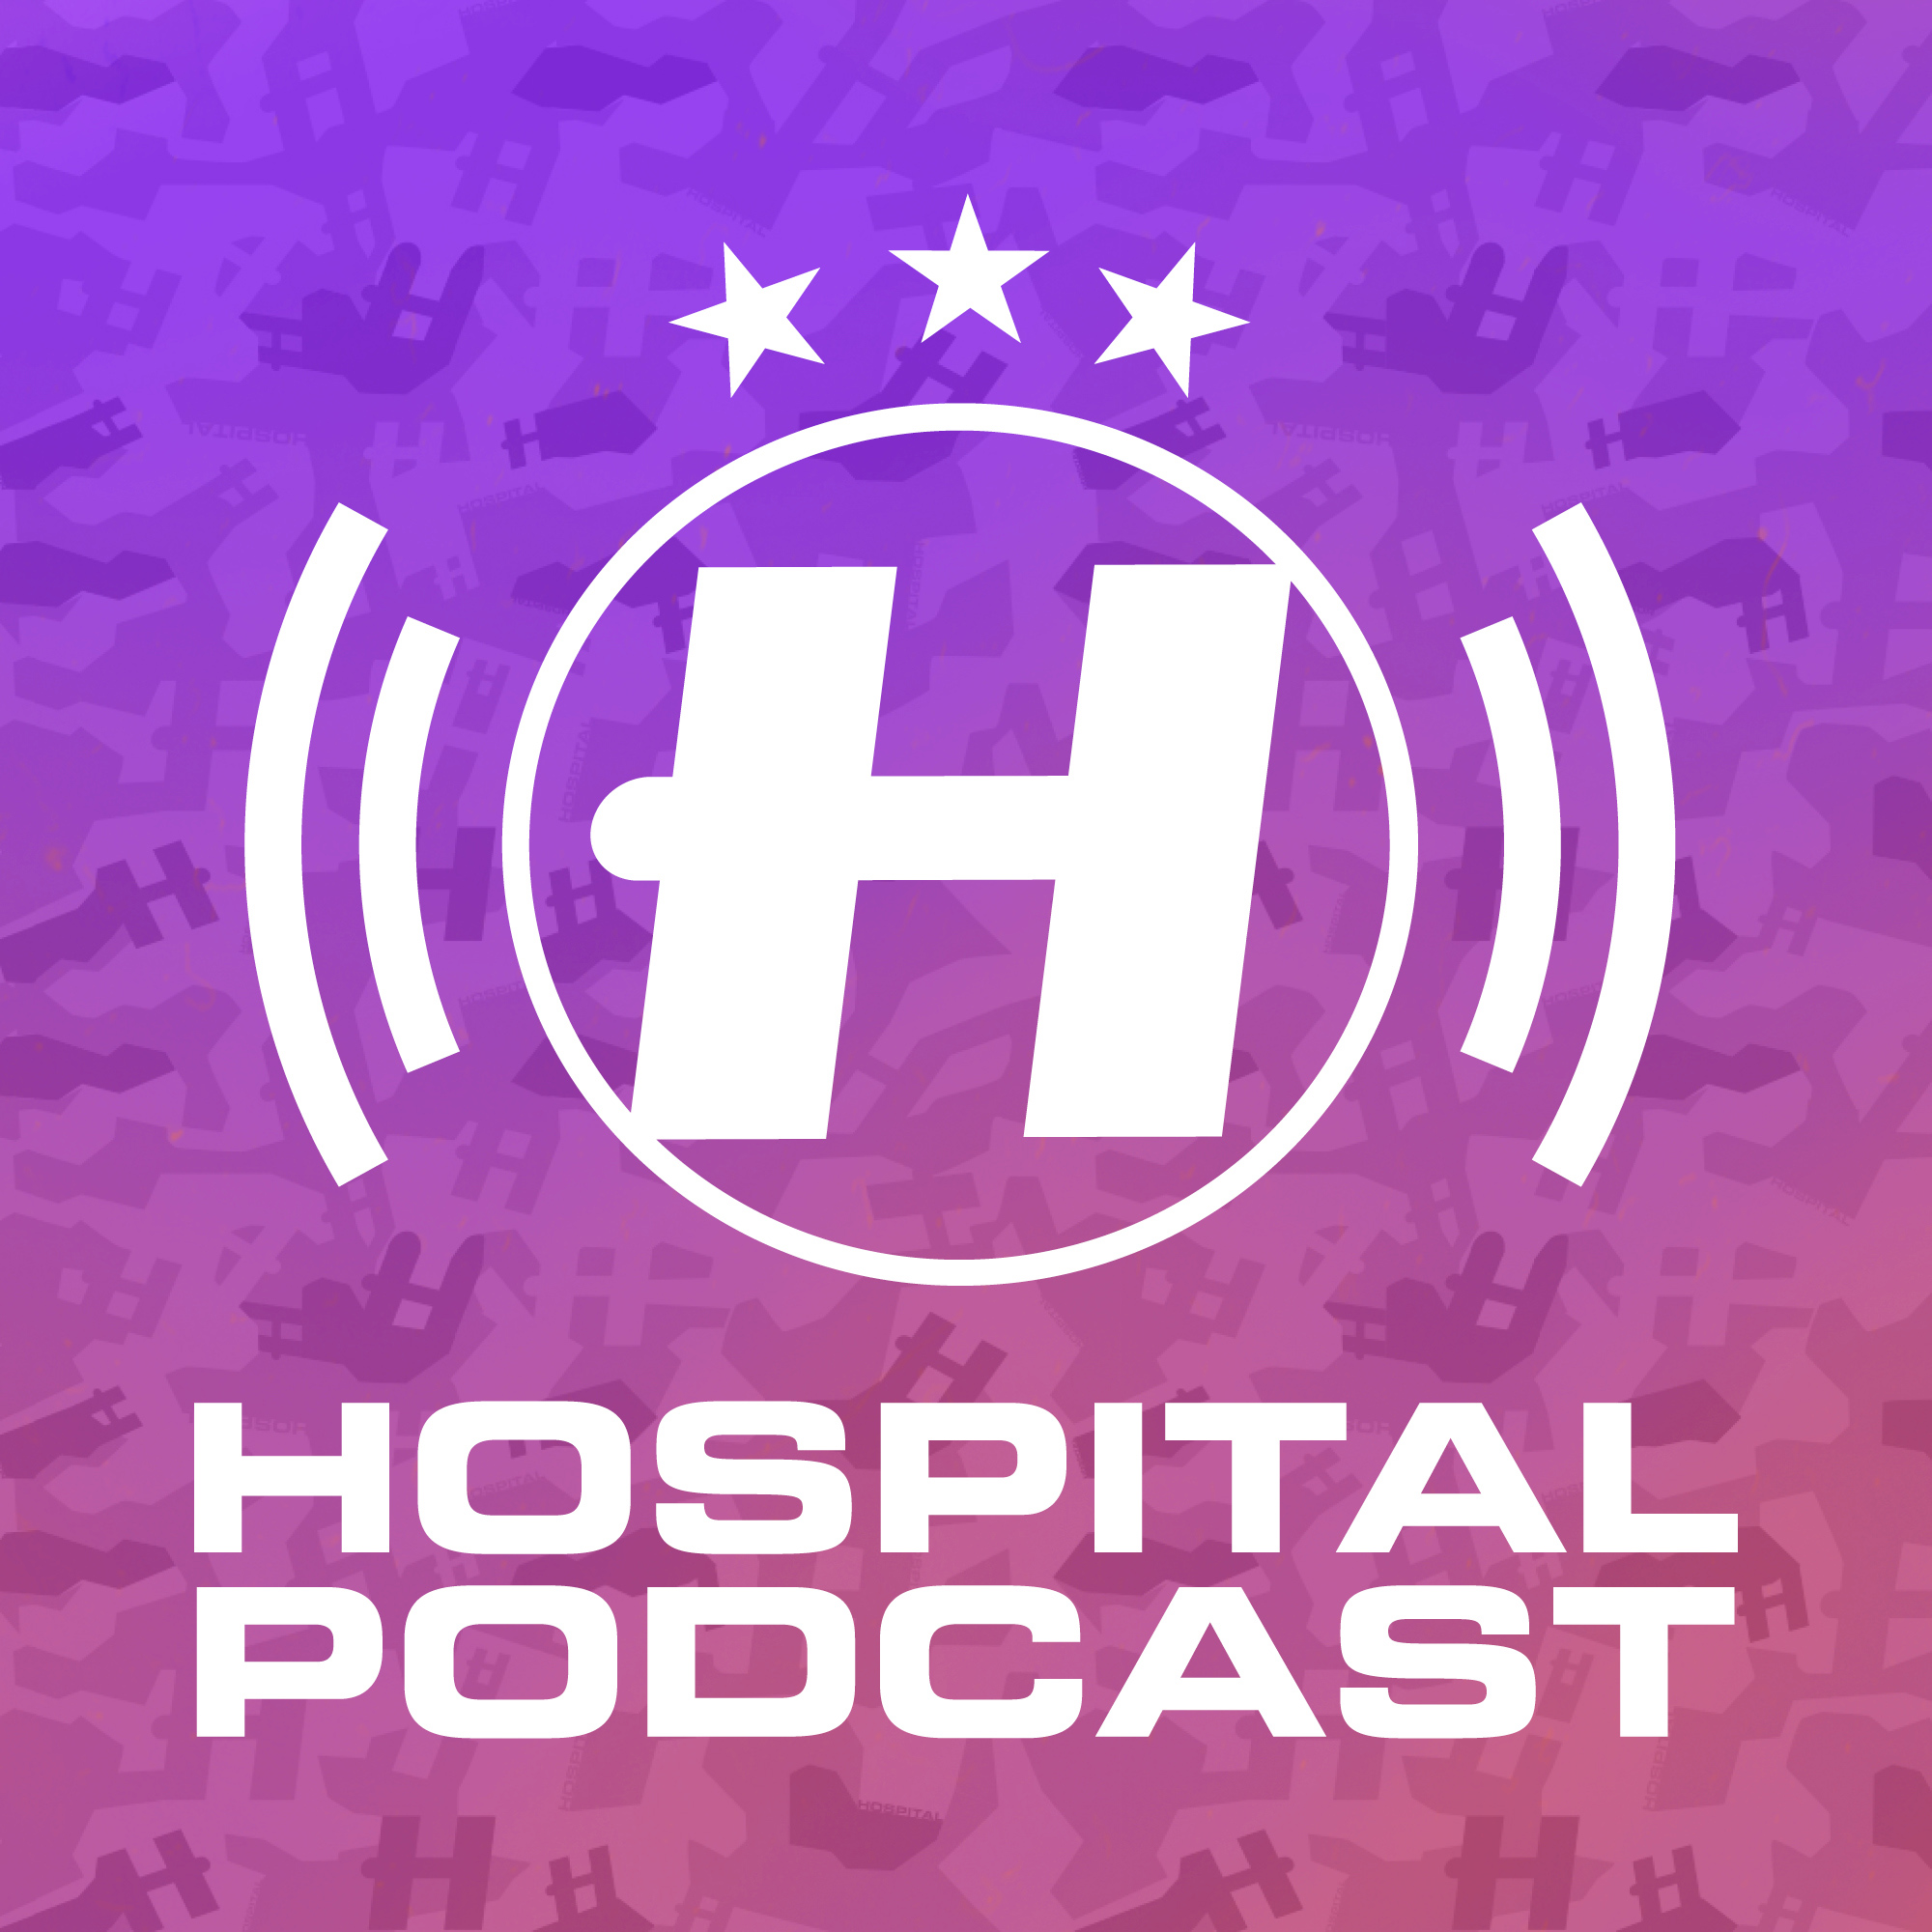 Hospital Podcast 392 with London Elektricity Artwork